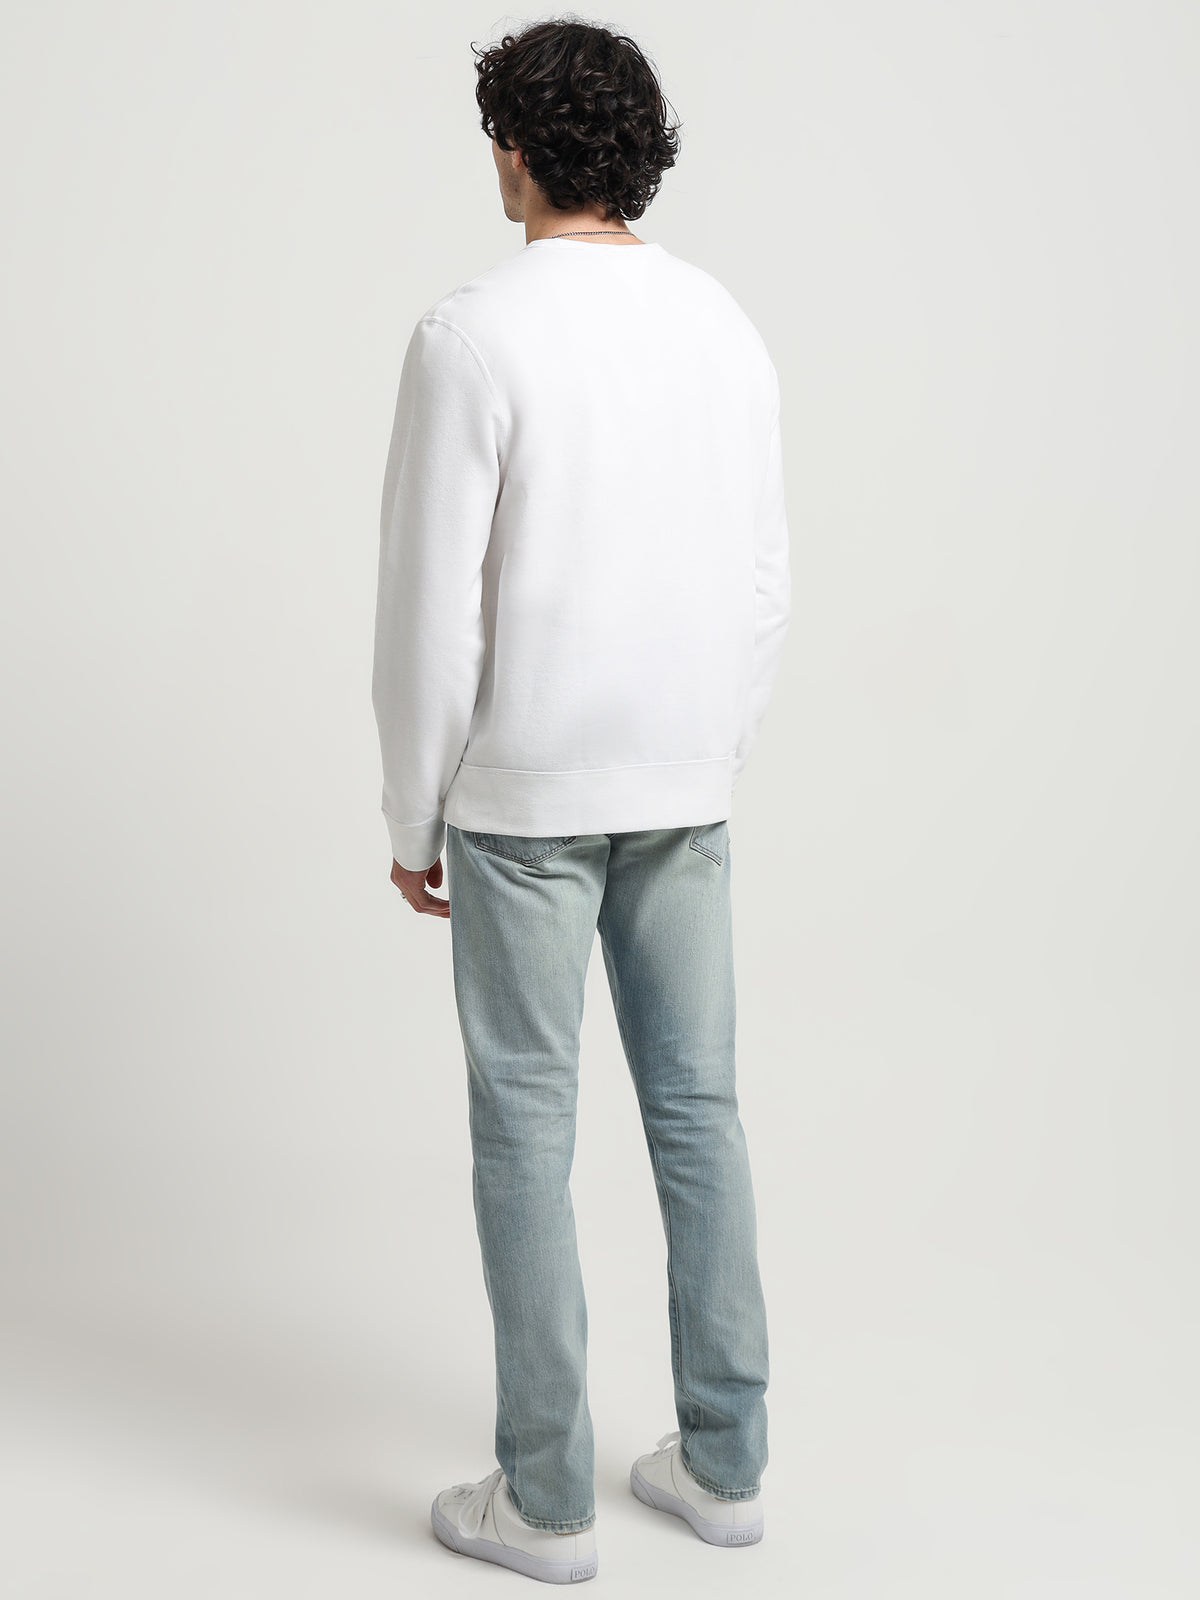 Polo Fleece Sweatshirt in White